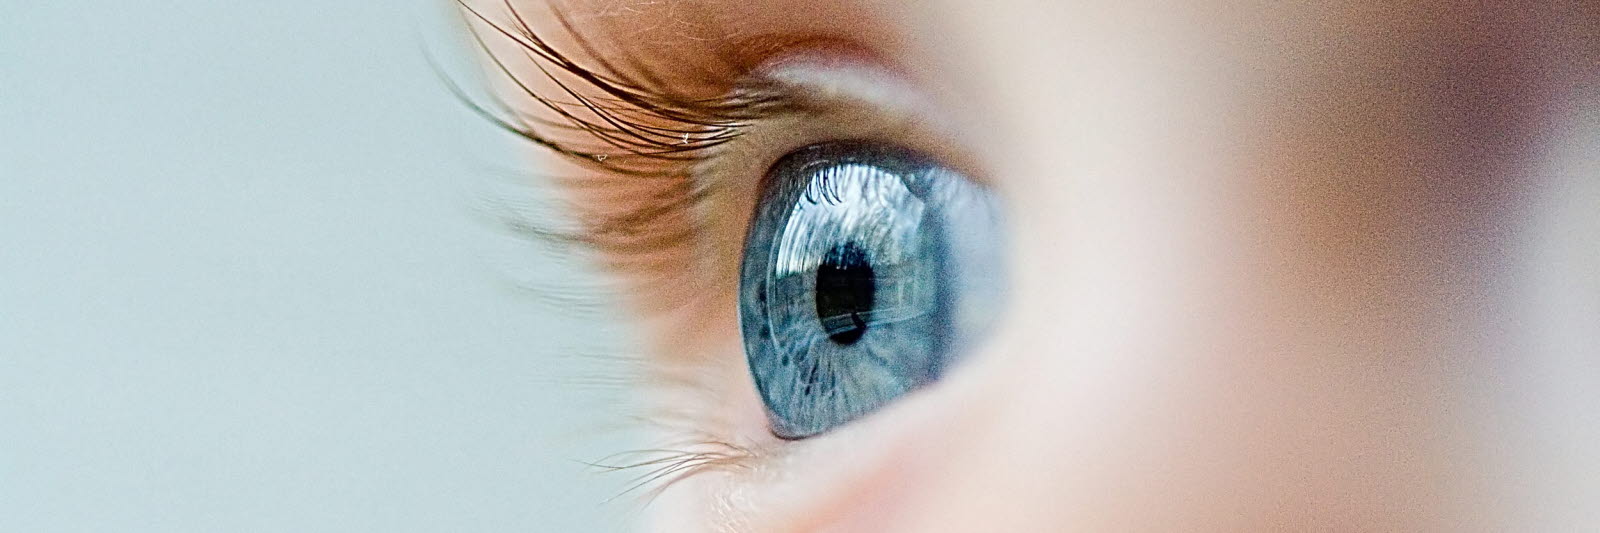 Focus on a baby blue eye